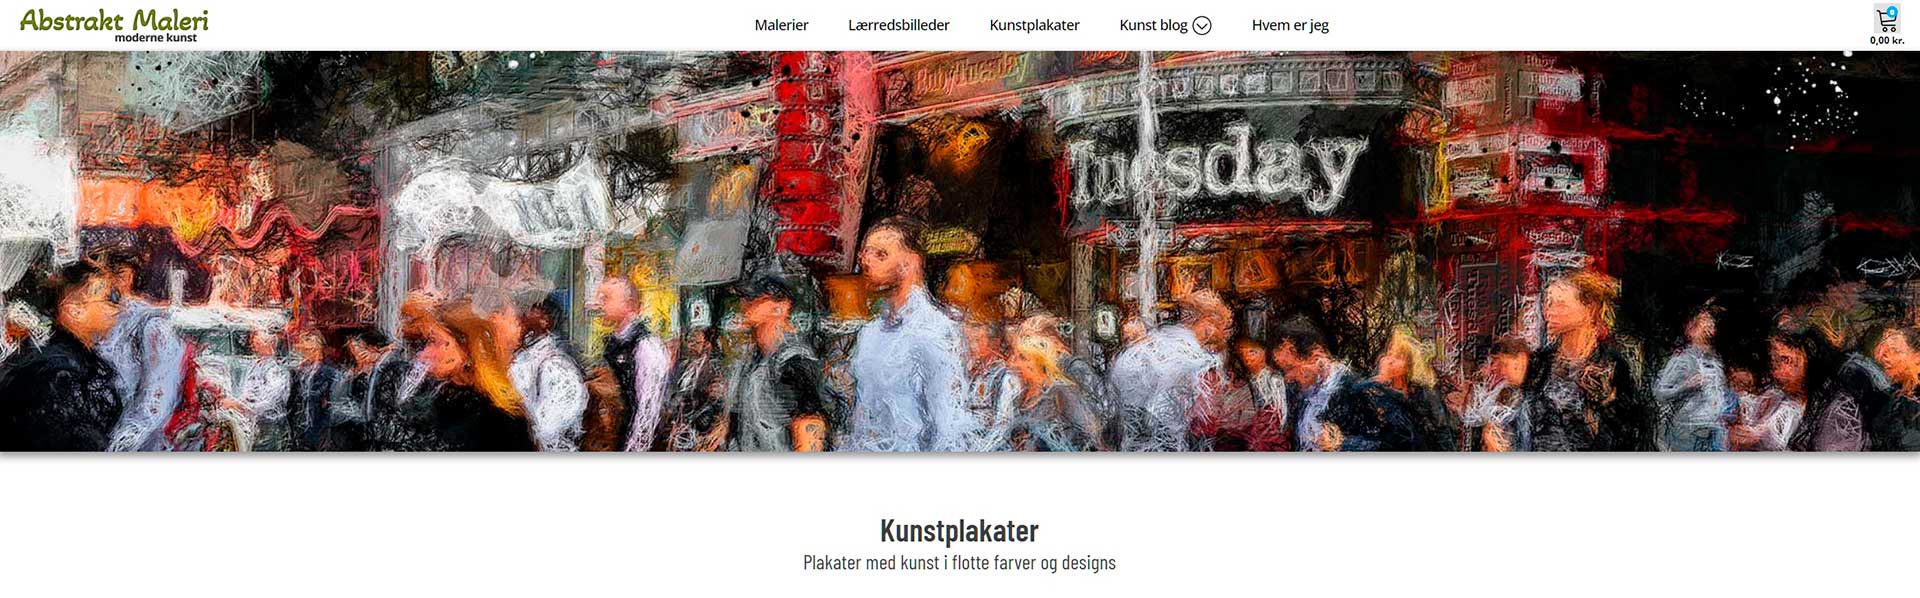 Webshop kunstplakater abstrakt-maleri.dk